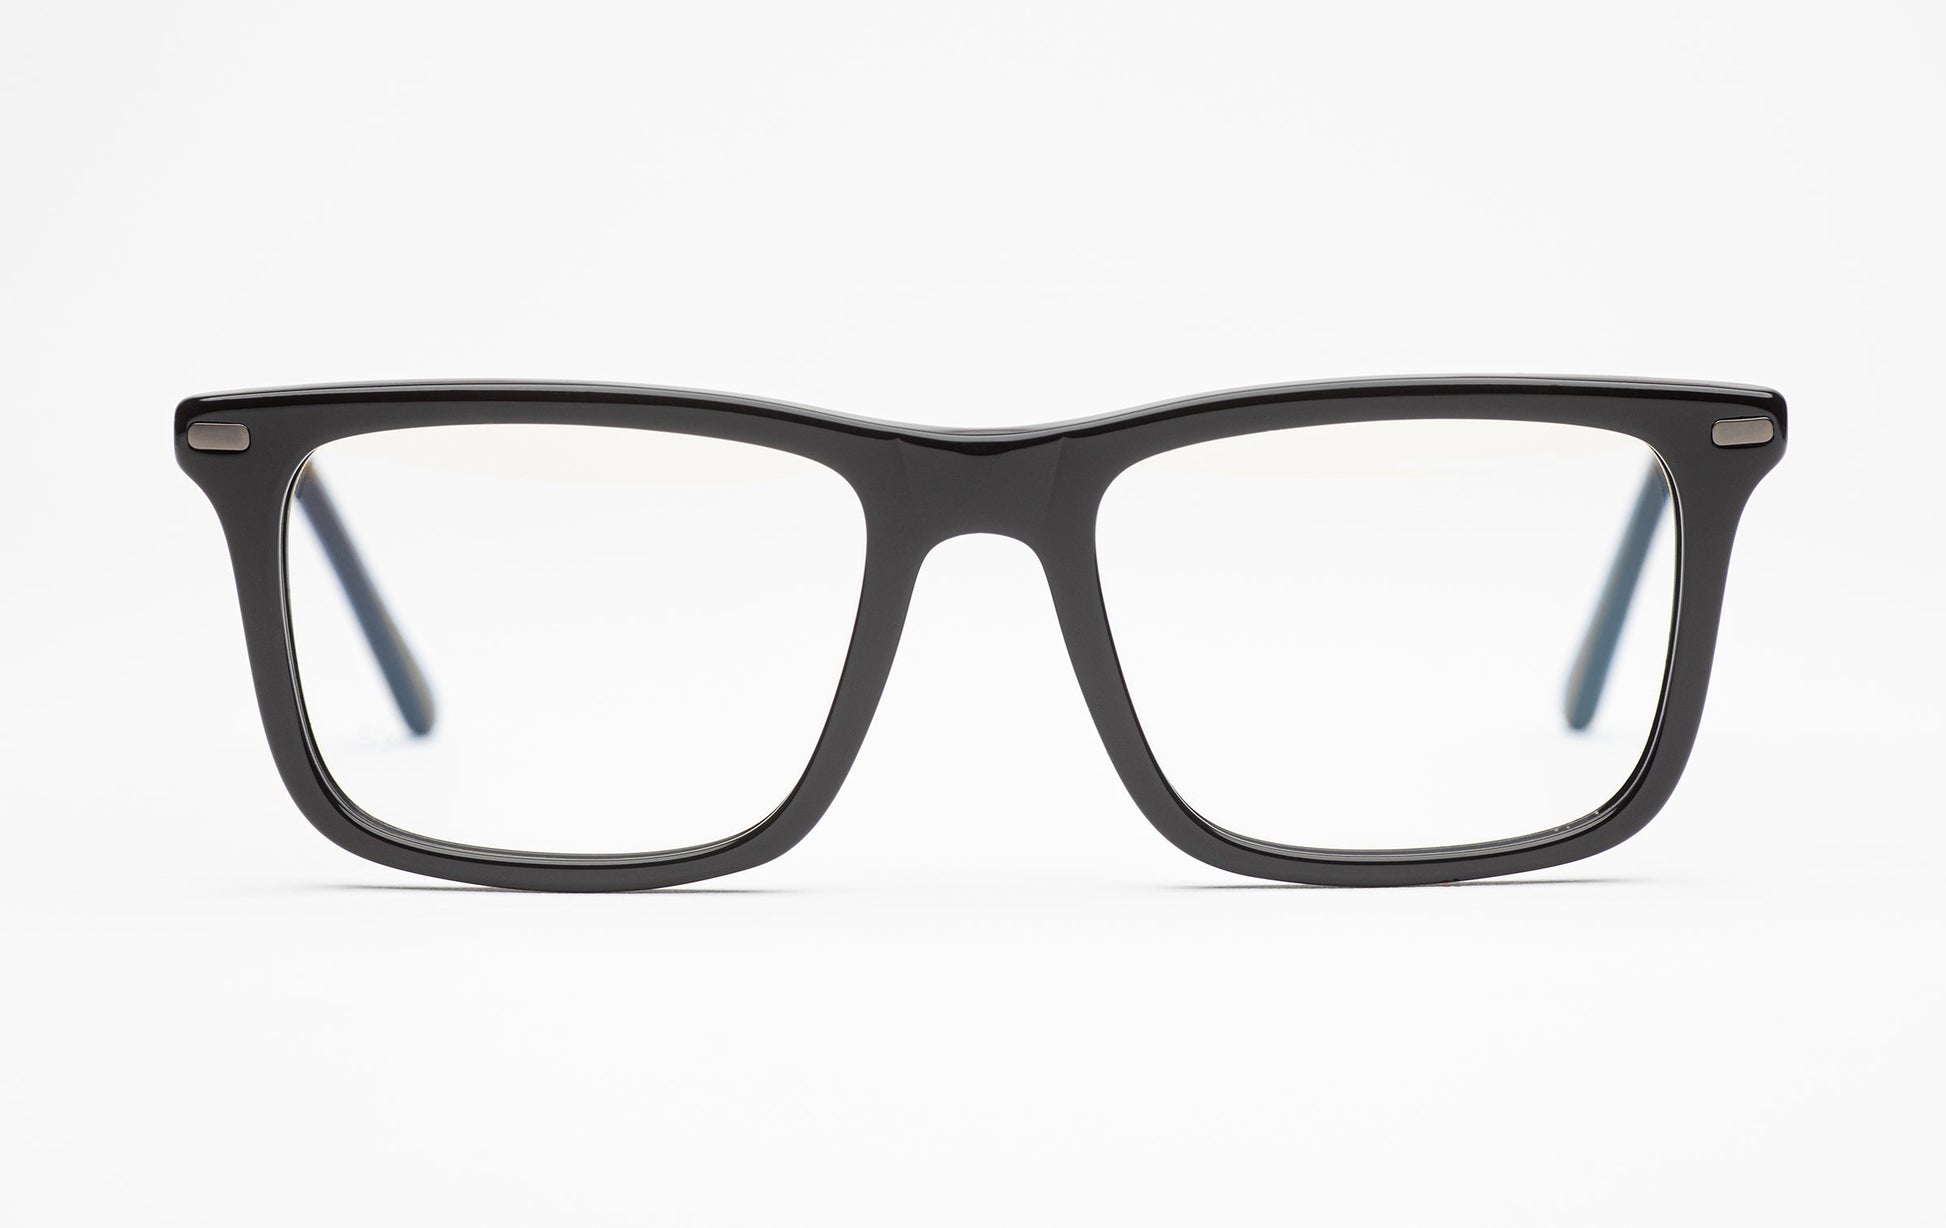 The Director 2 | Black Frame Glasses - Designer Prescription Glasses with Oversized Rectangular Frames 